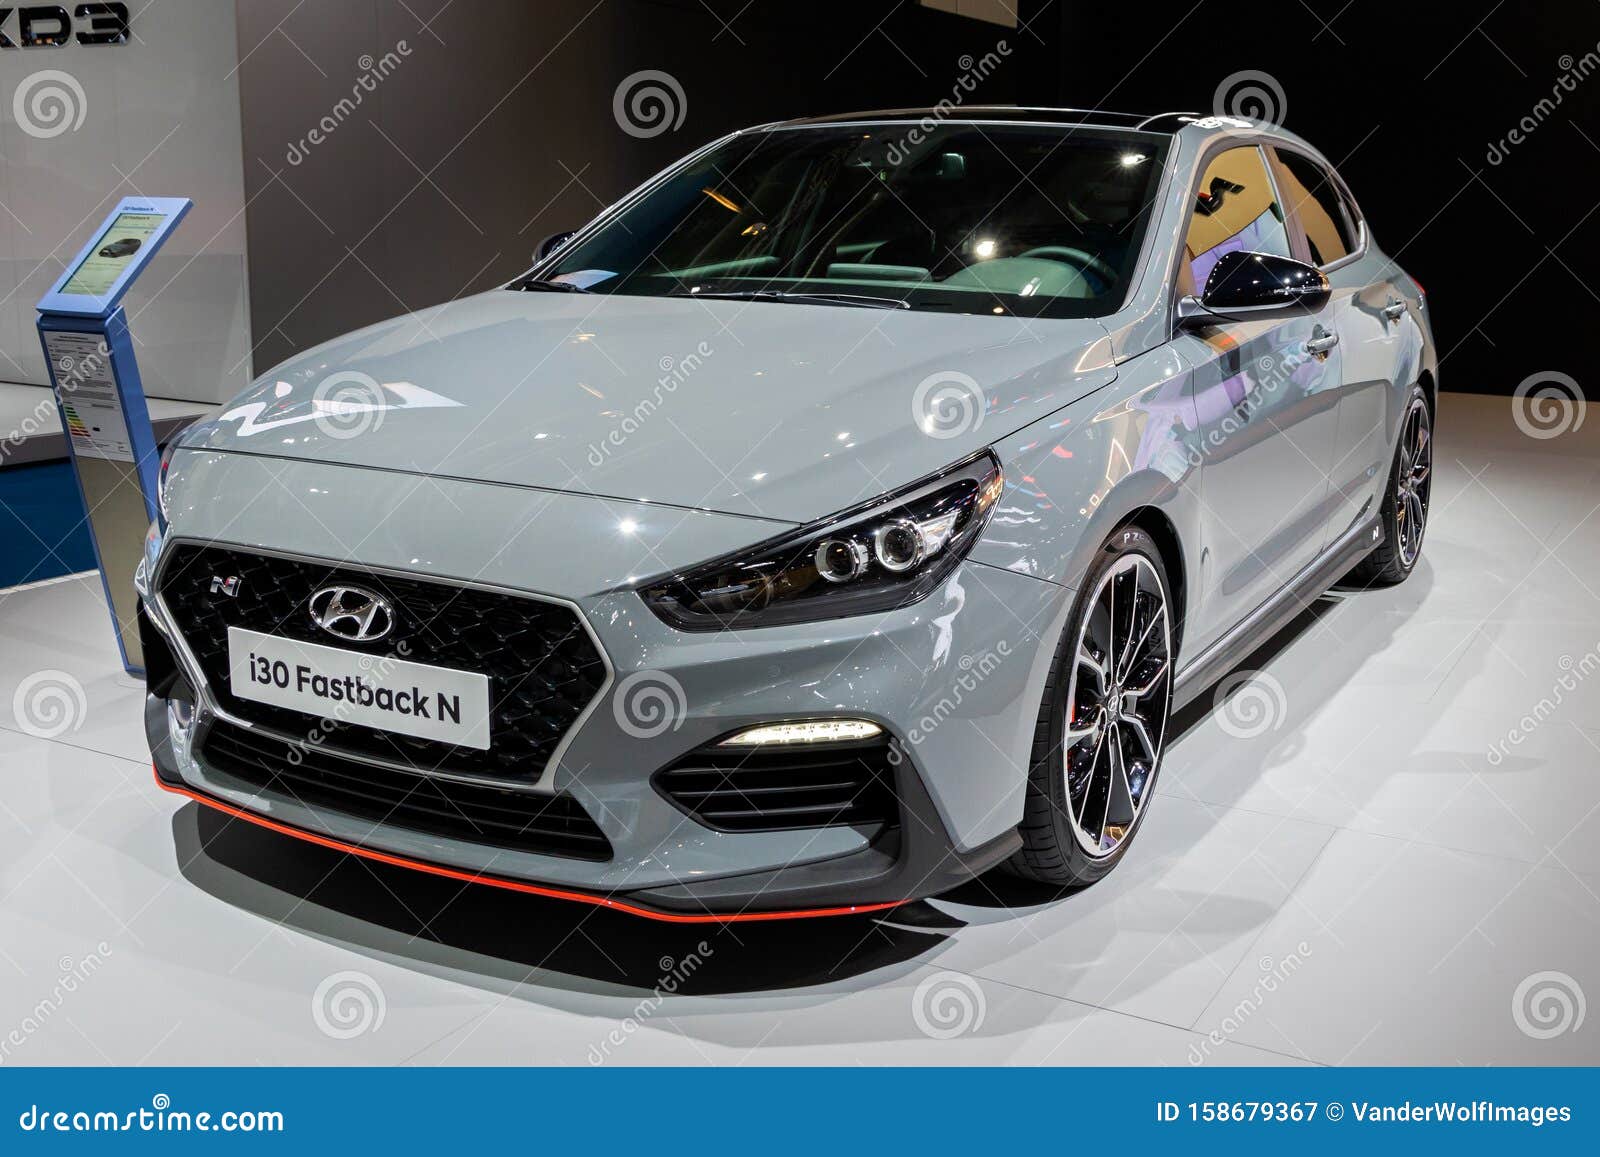 2020 Hyundai I30 Fastback N Car Editorial Photography - Image of autoshow,  grey: 158679367